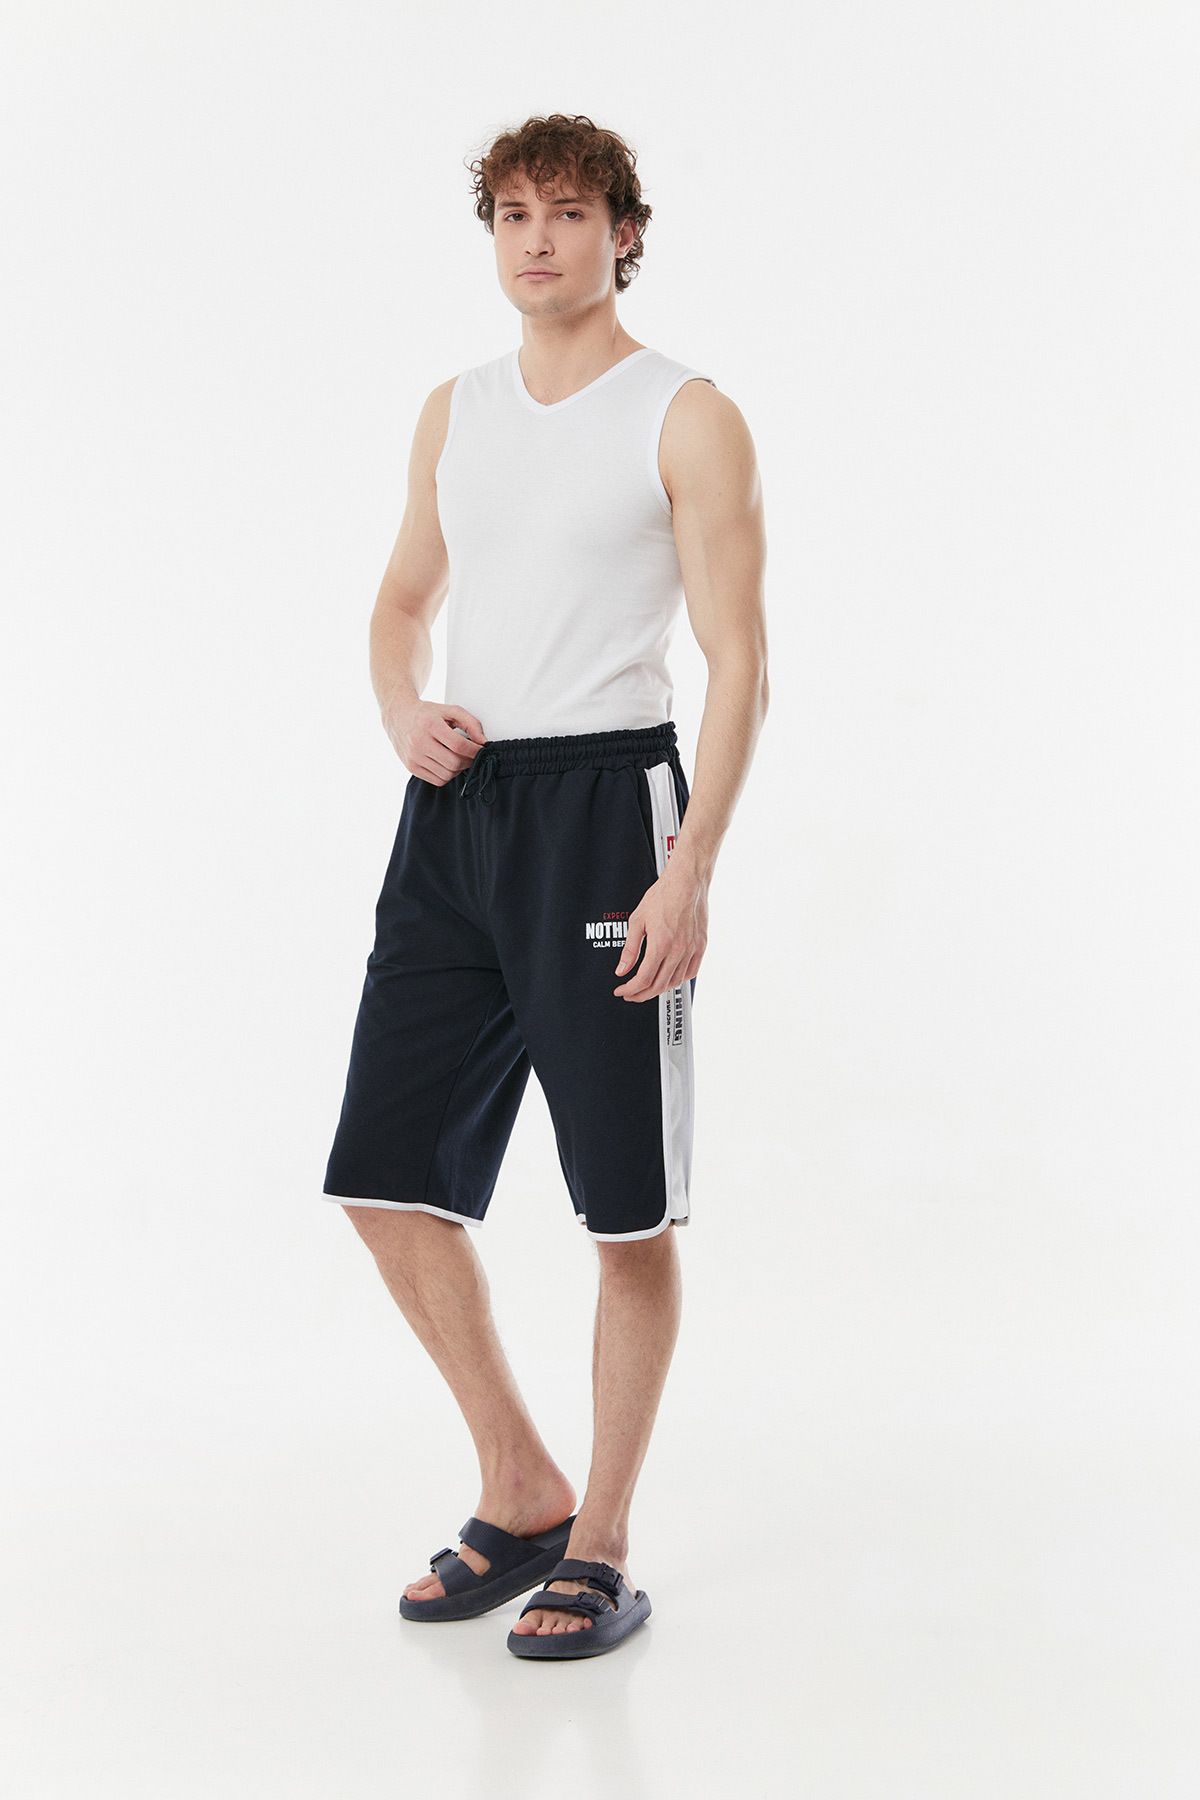 MAXI DRY Sweat Absorbent Anti Excessive Sweating Wet Leak Proof Khaki Men's  Shorts Thermal Shorts - Trendyol